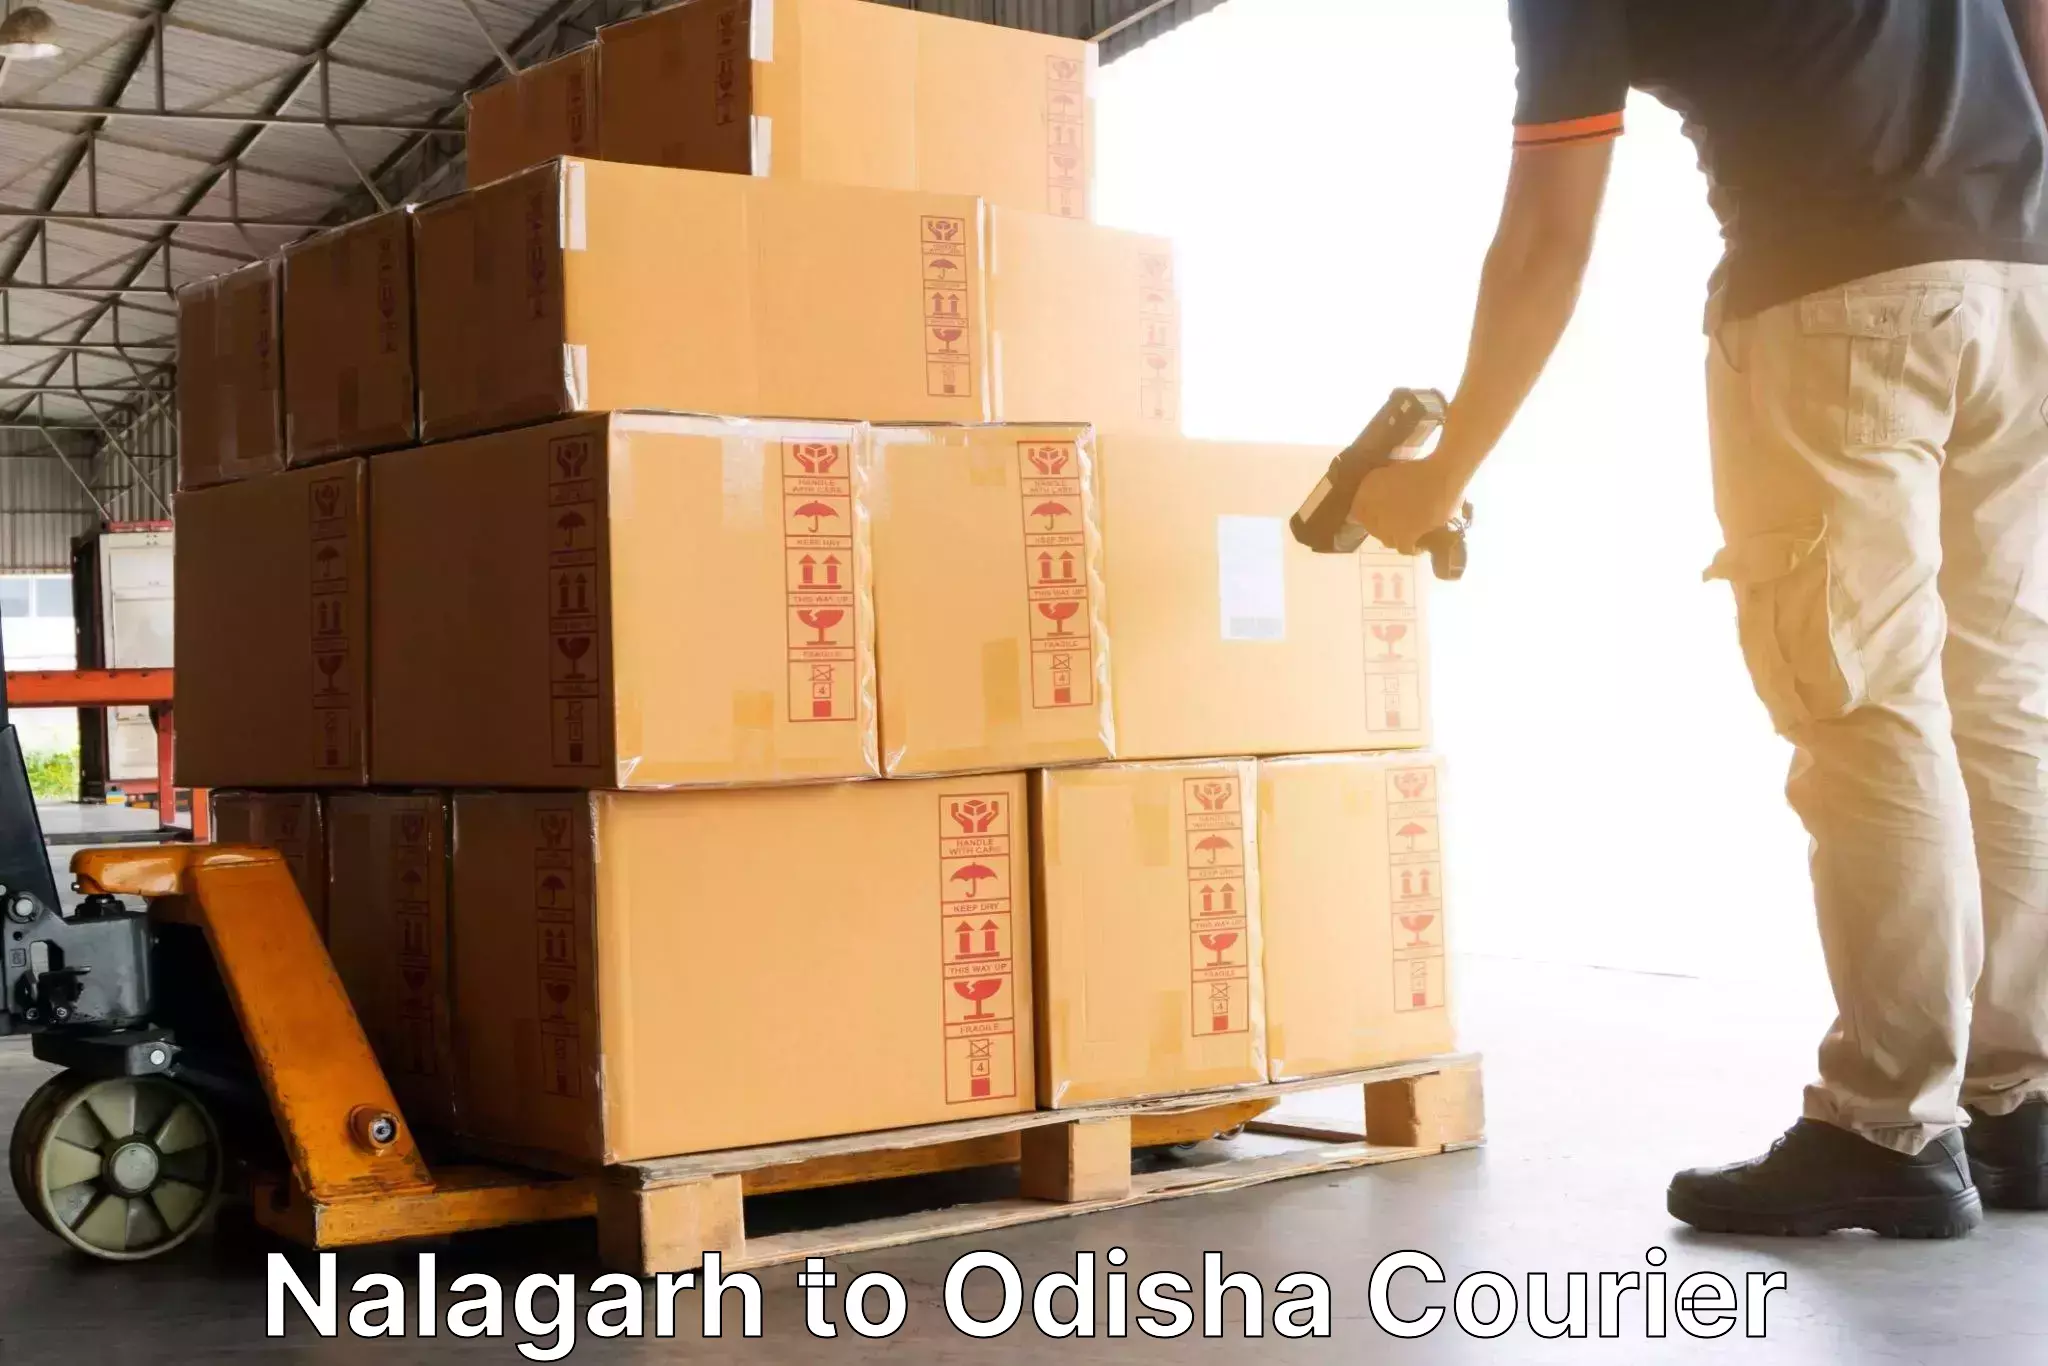 Courier service comparison Nalagarh to Bonth